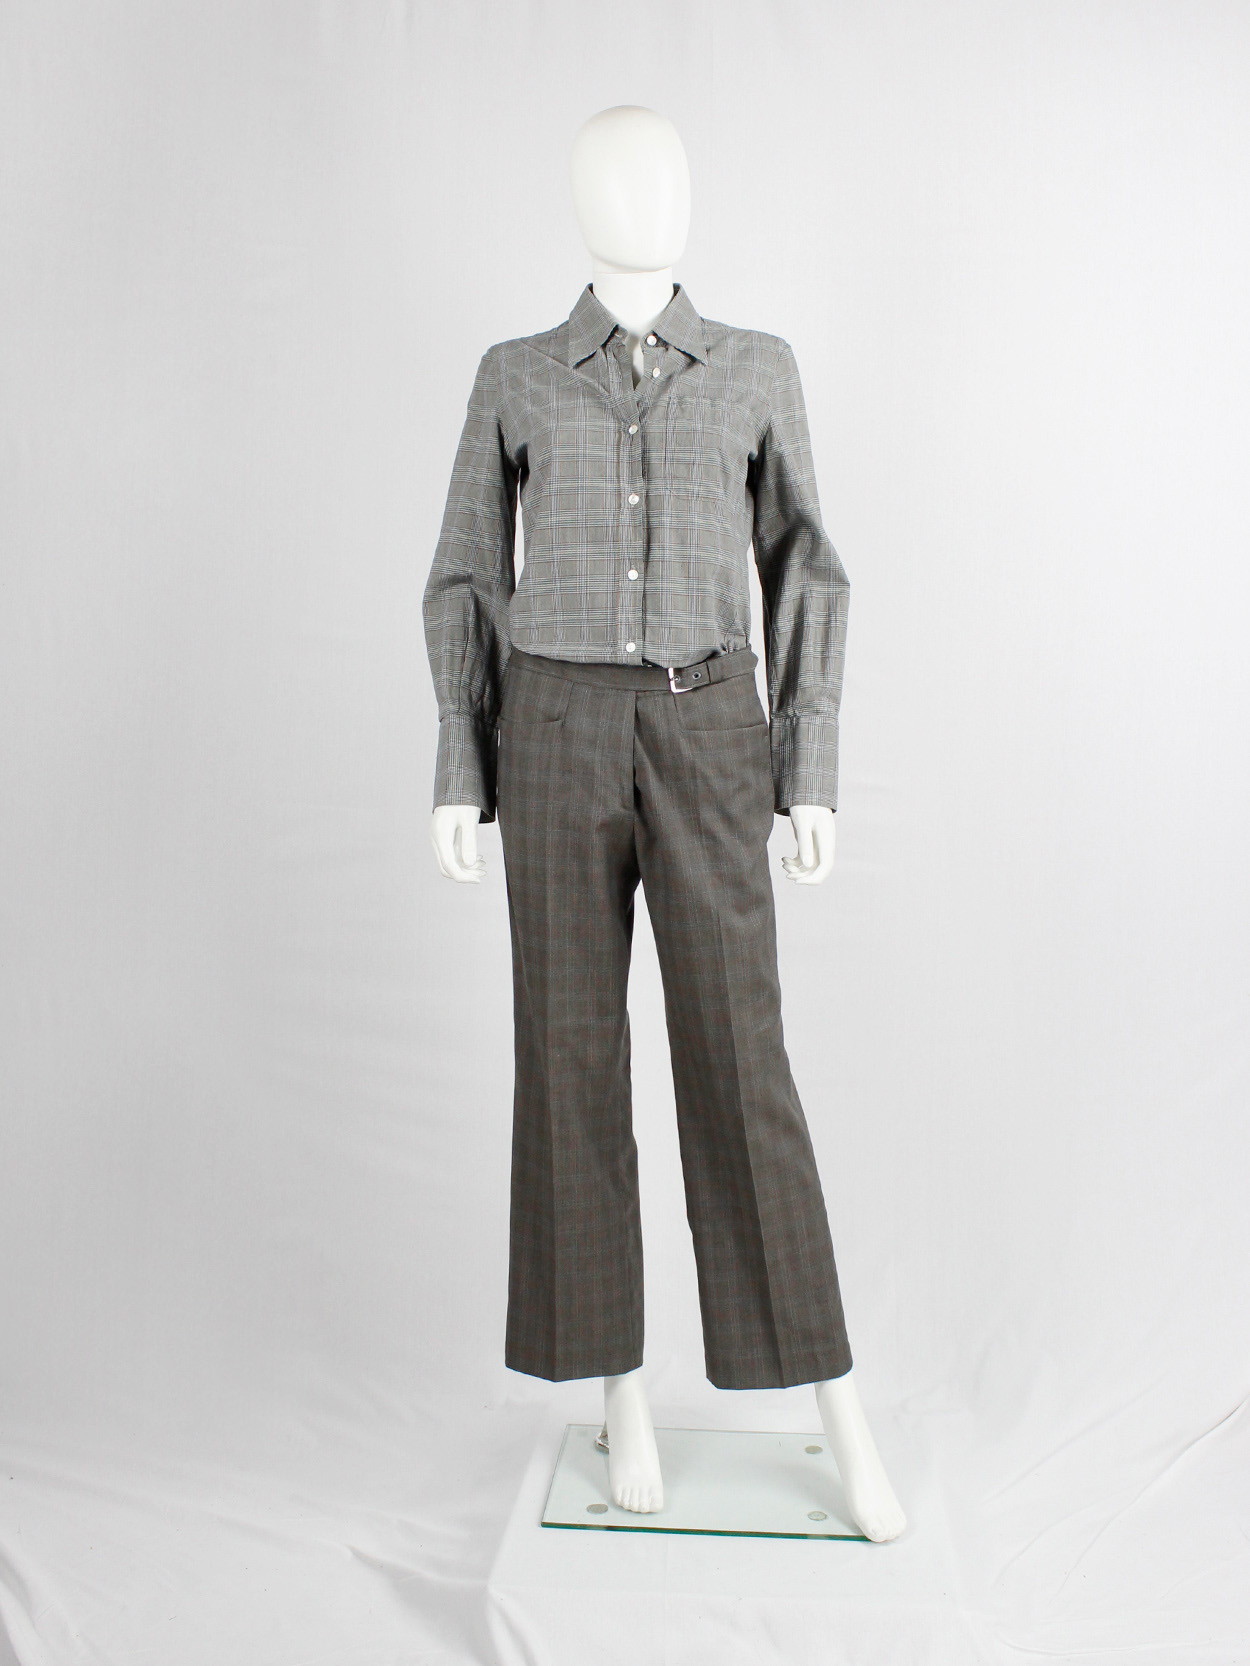 Maison Martin Margiela brown tartan trousers with side belt detail fall 2004 (11)